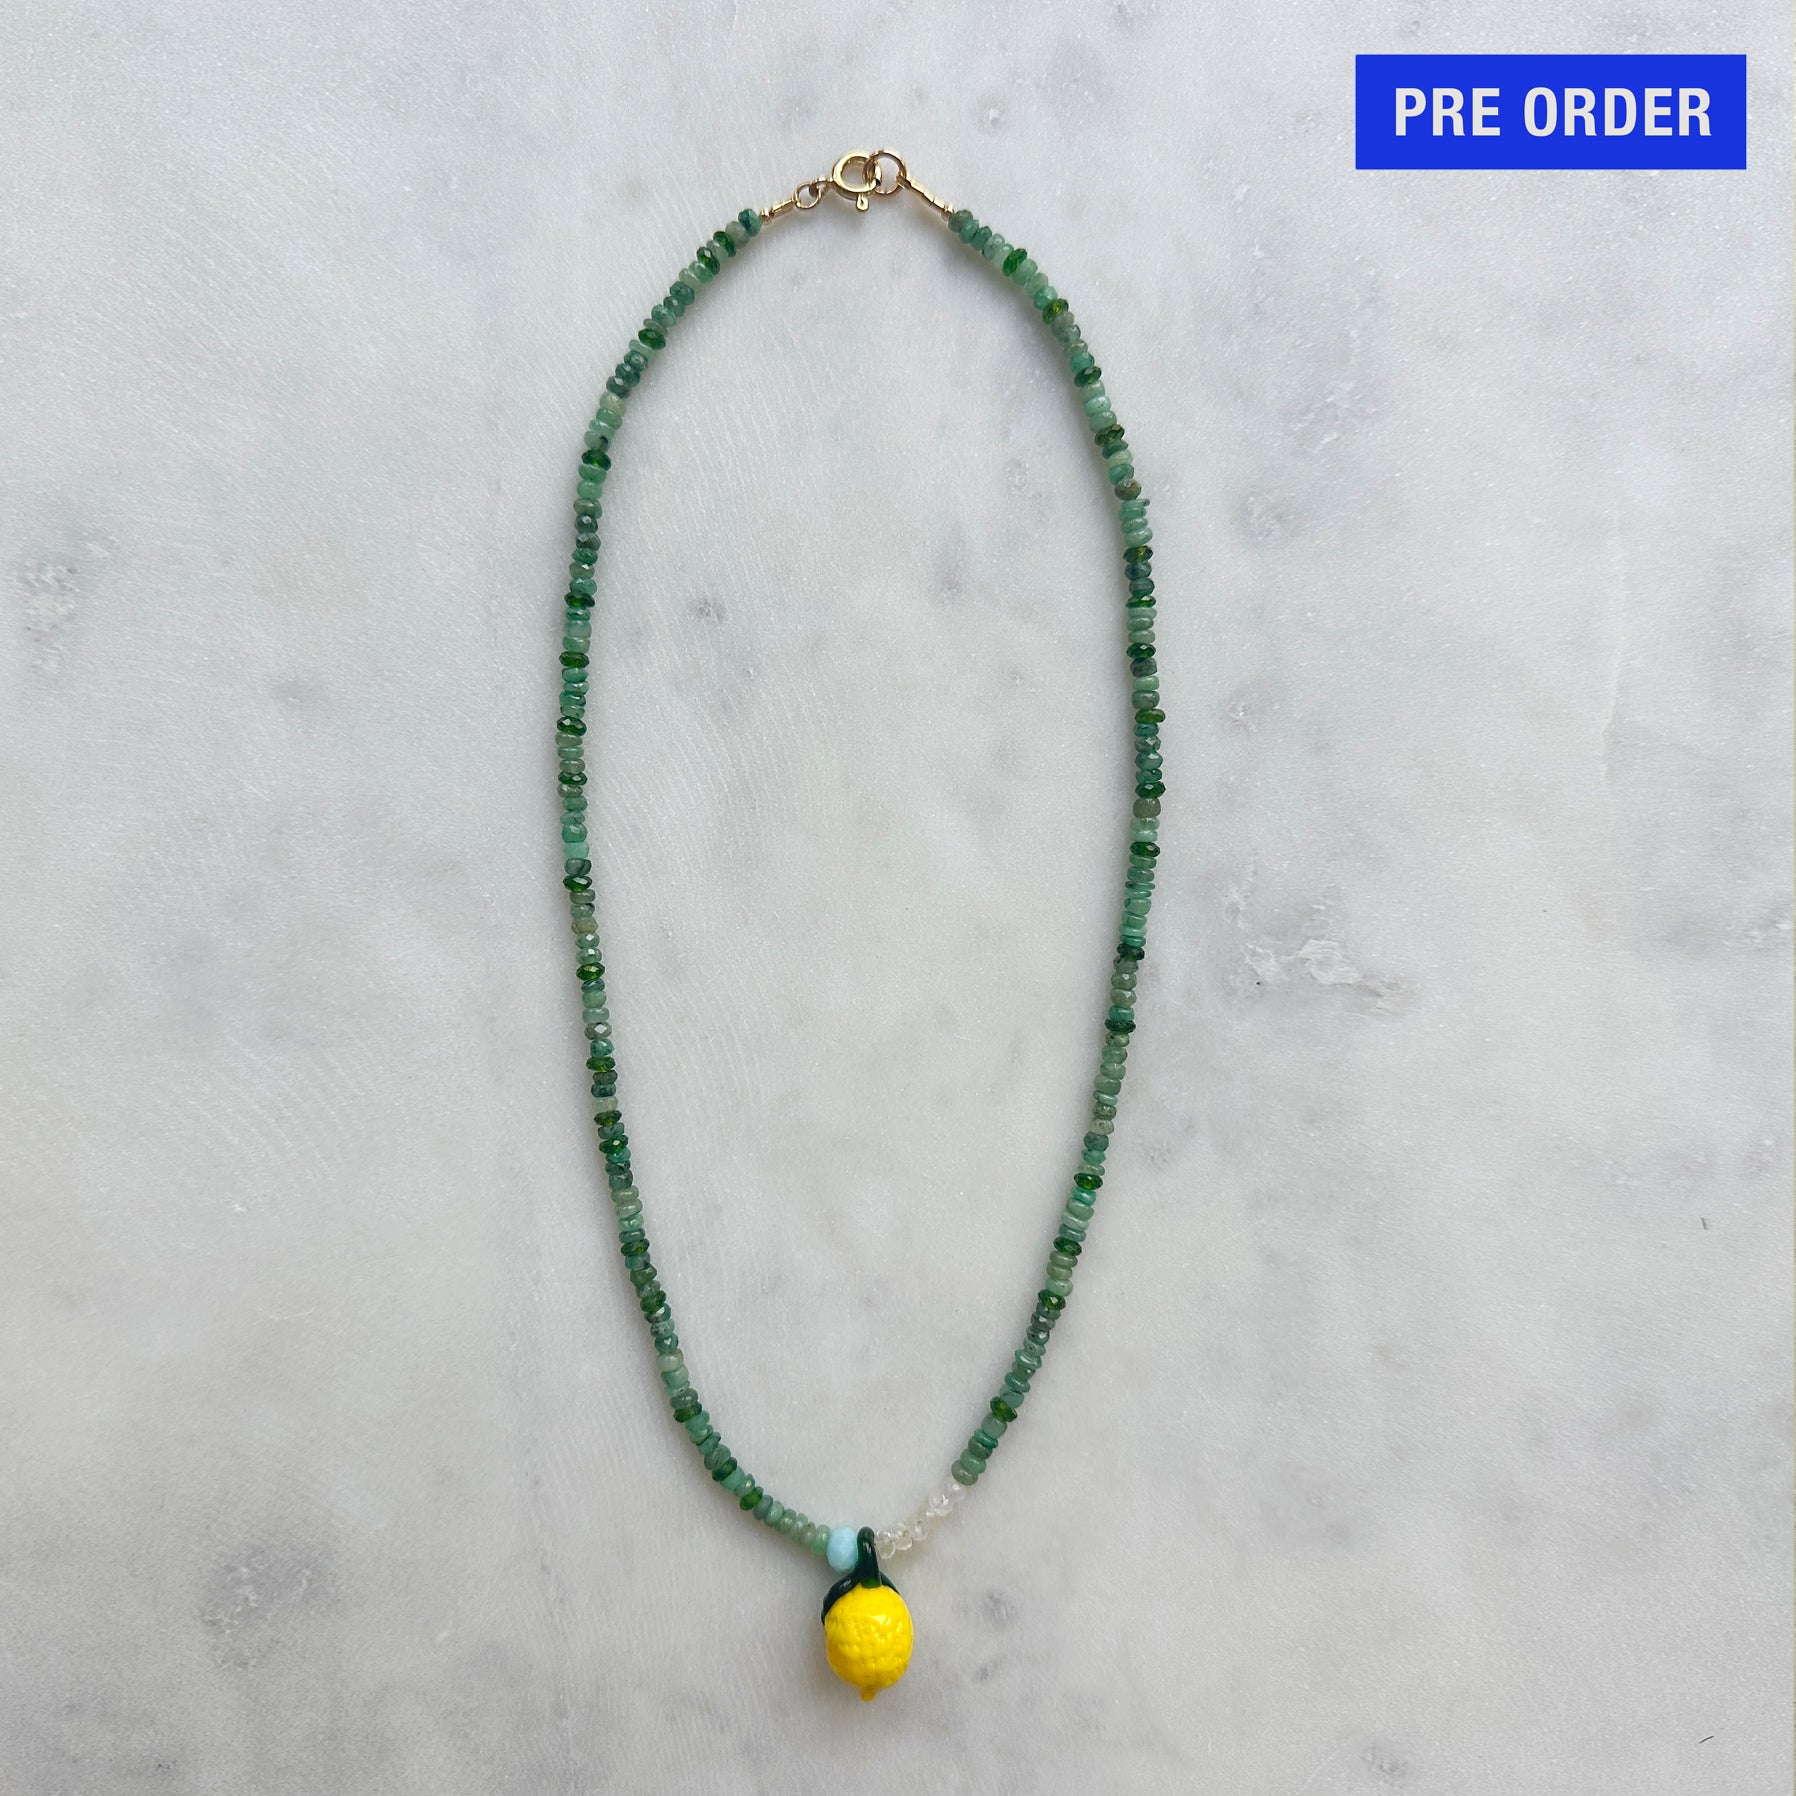 PRE-ORDER – Lemon & Lime Necklace